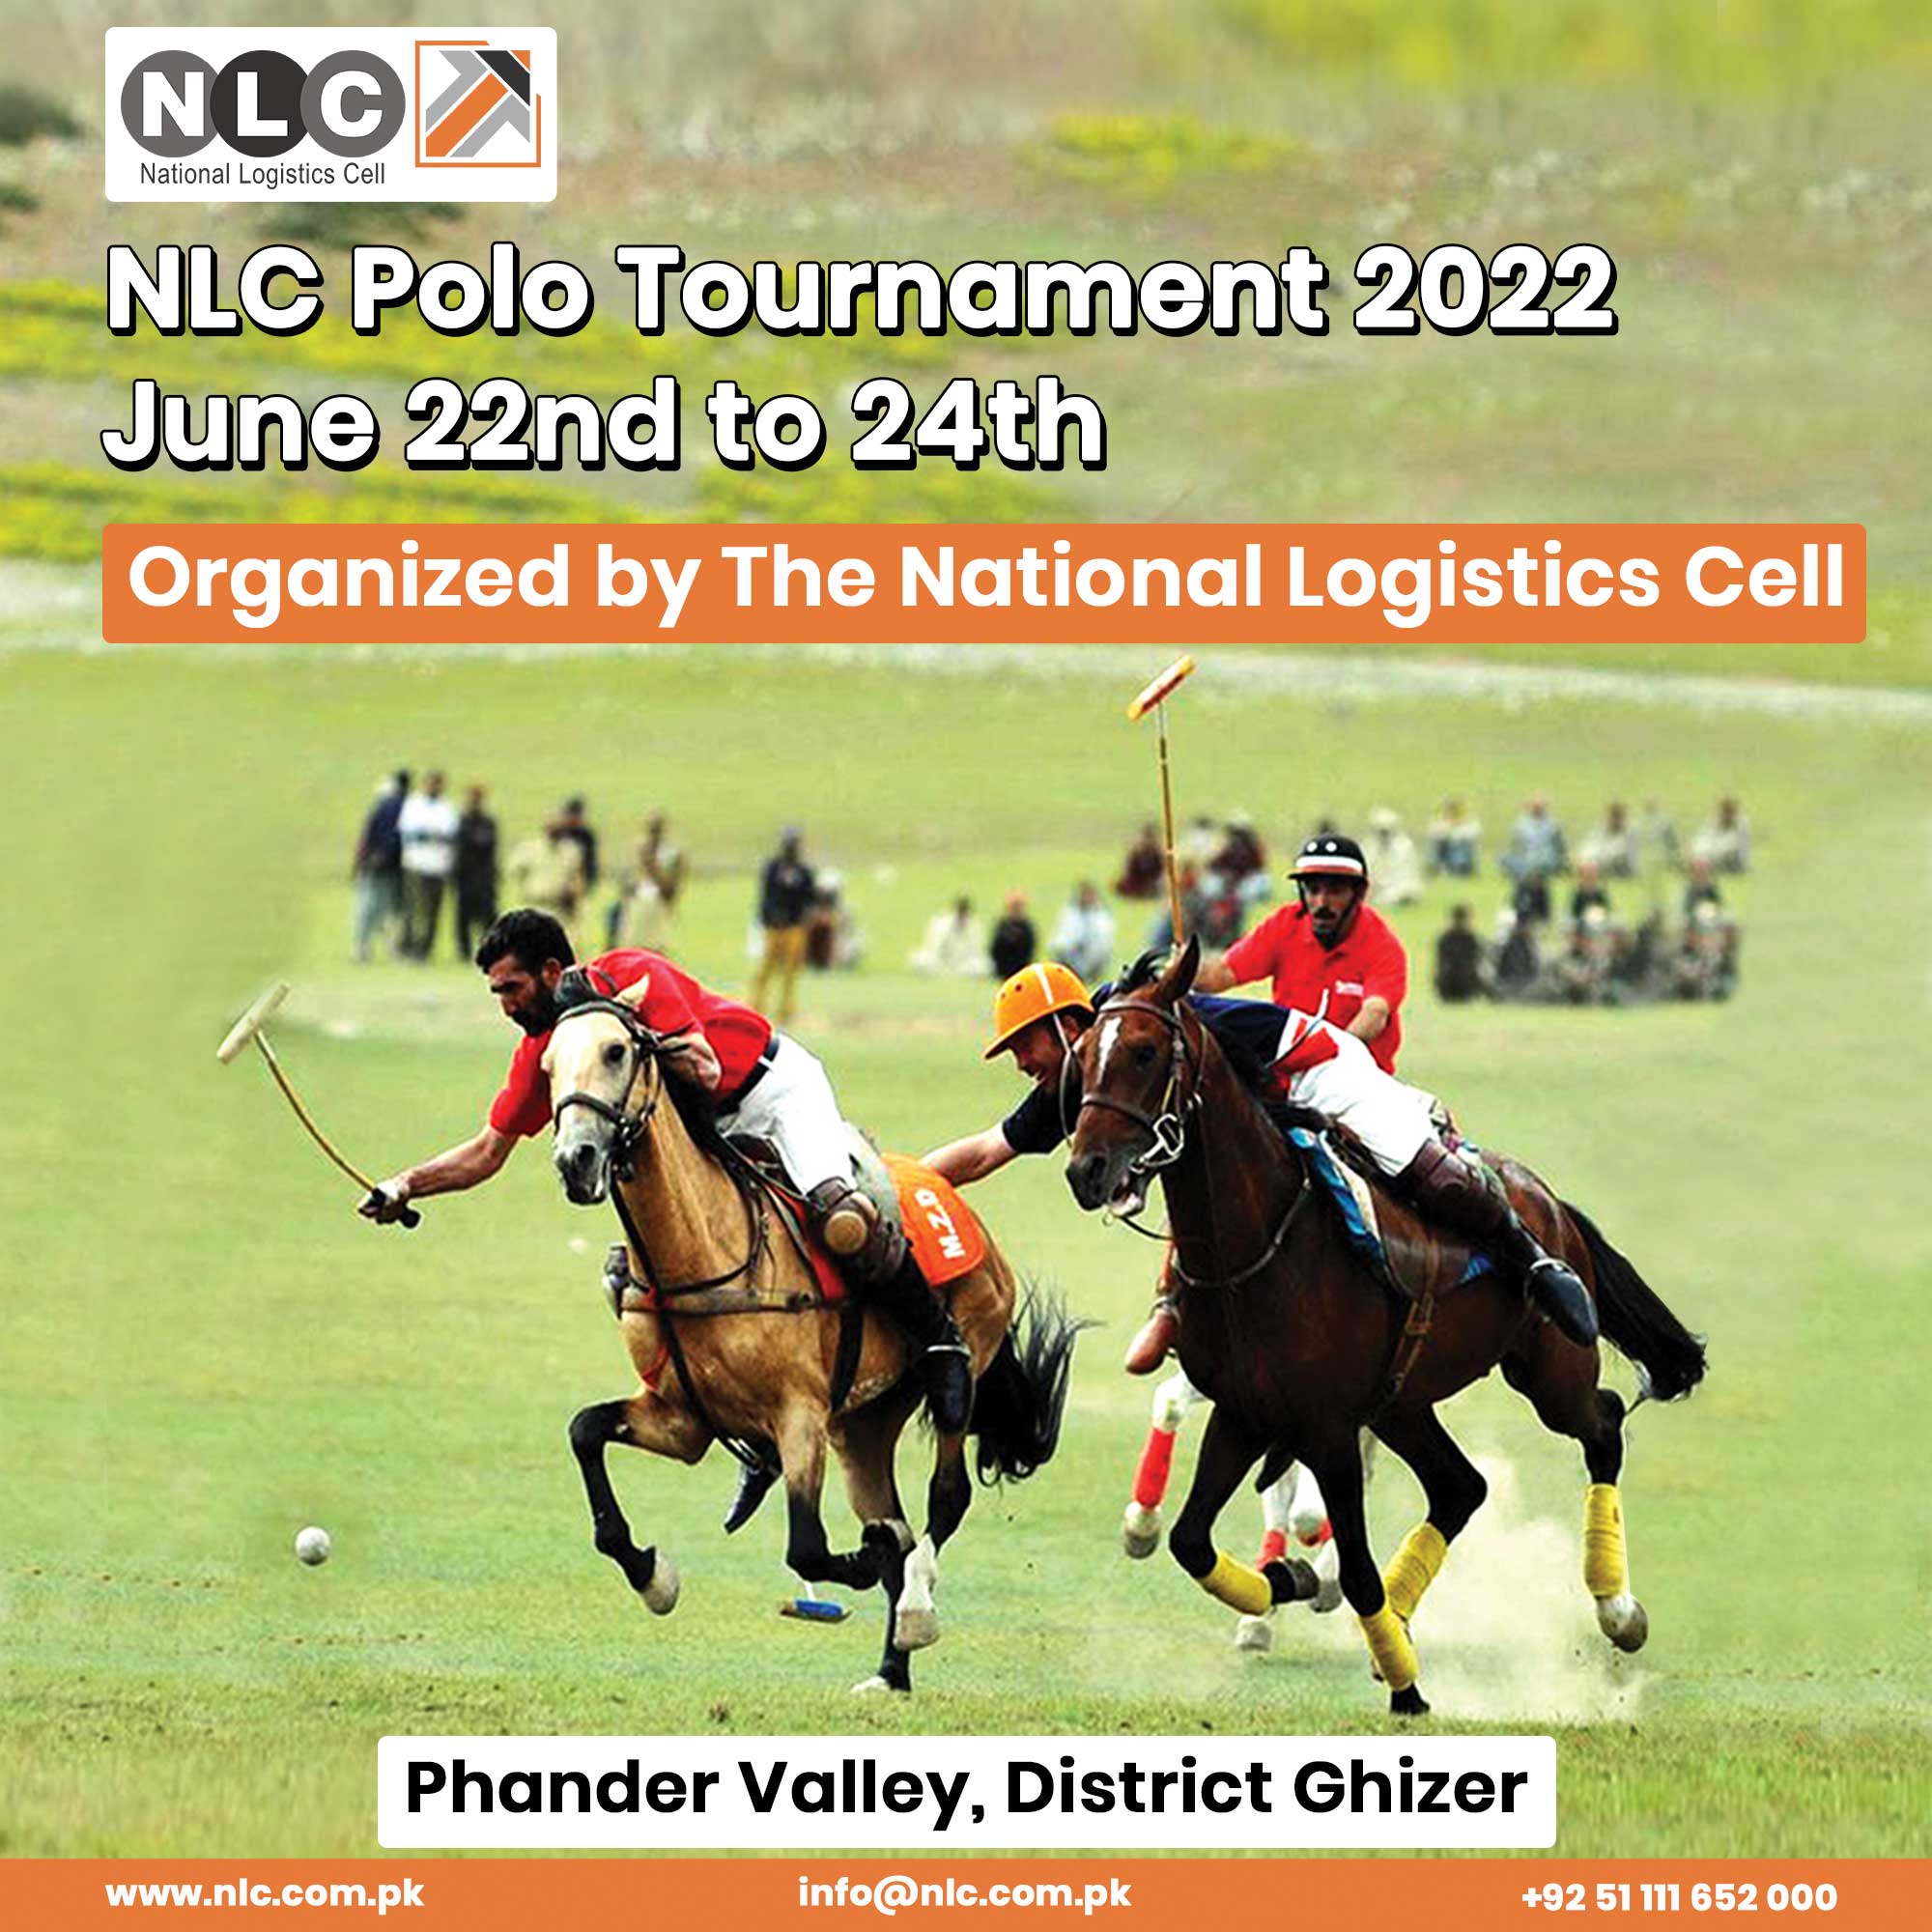 NLC Polo Tournament at Phandar